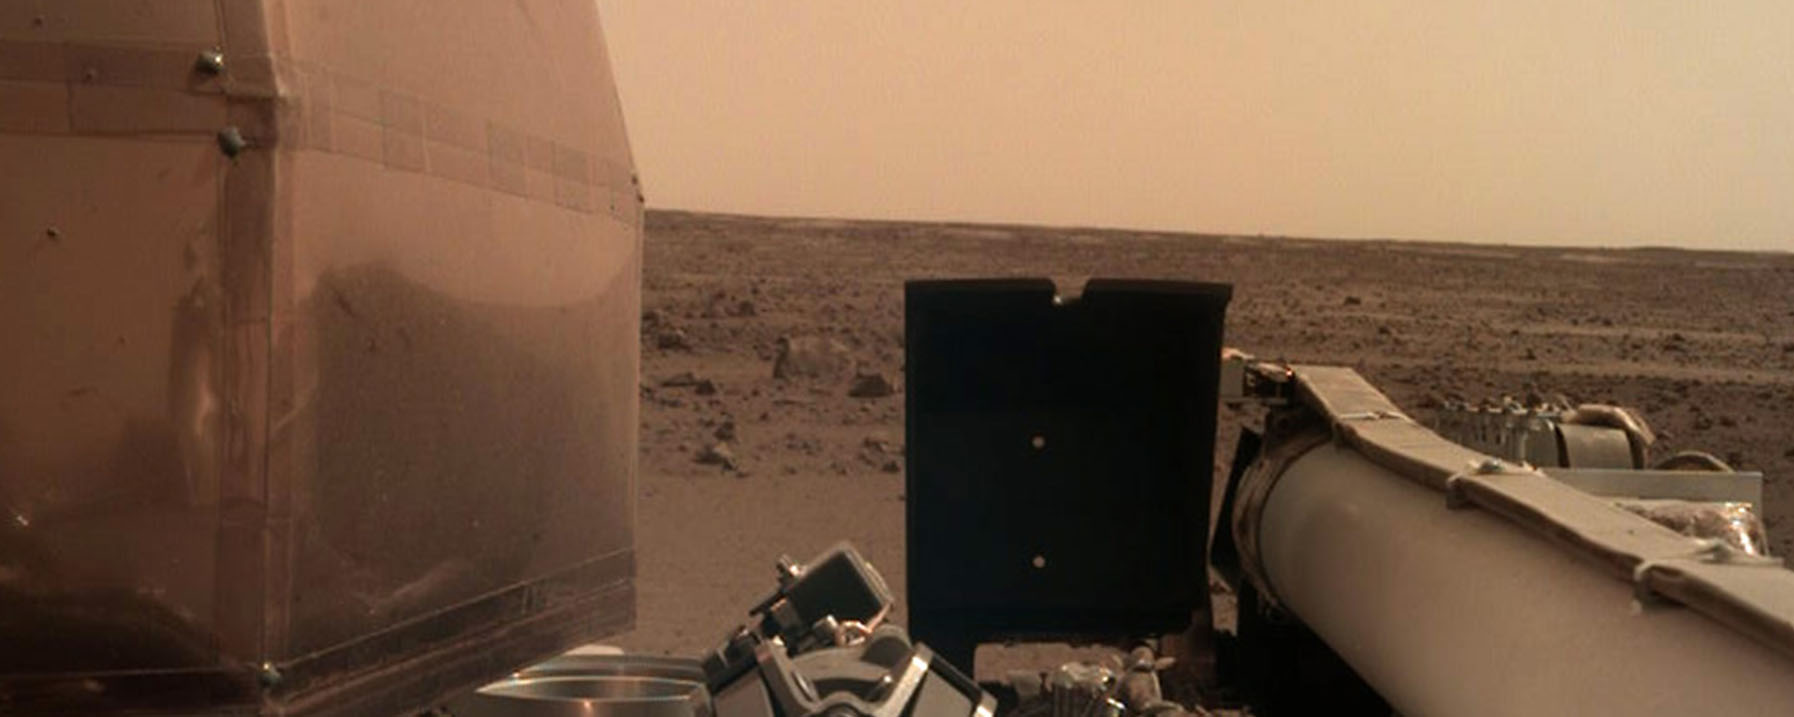 InSight Spacecraft on Mars